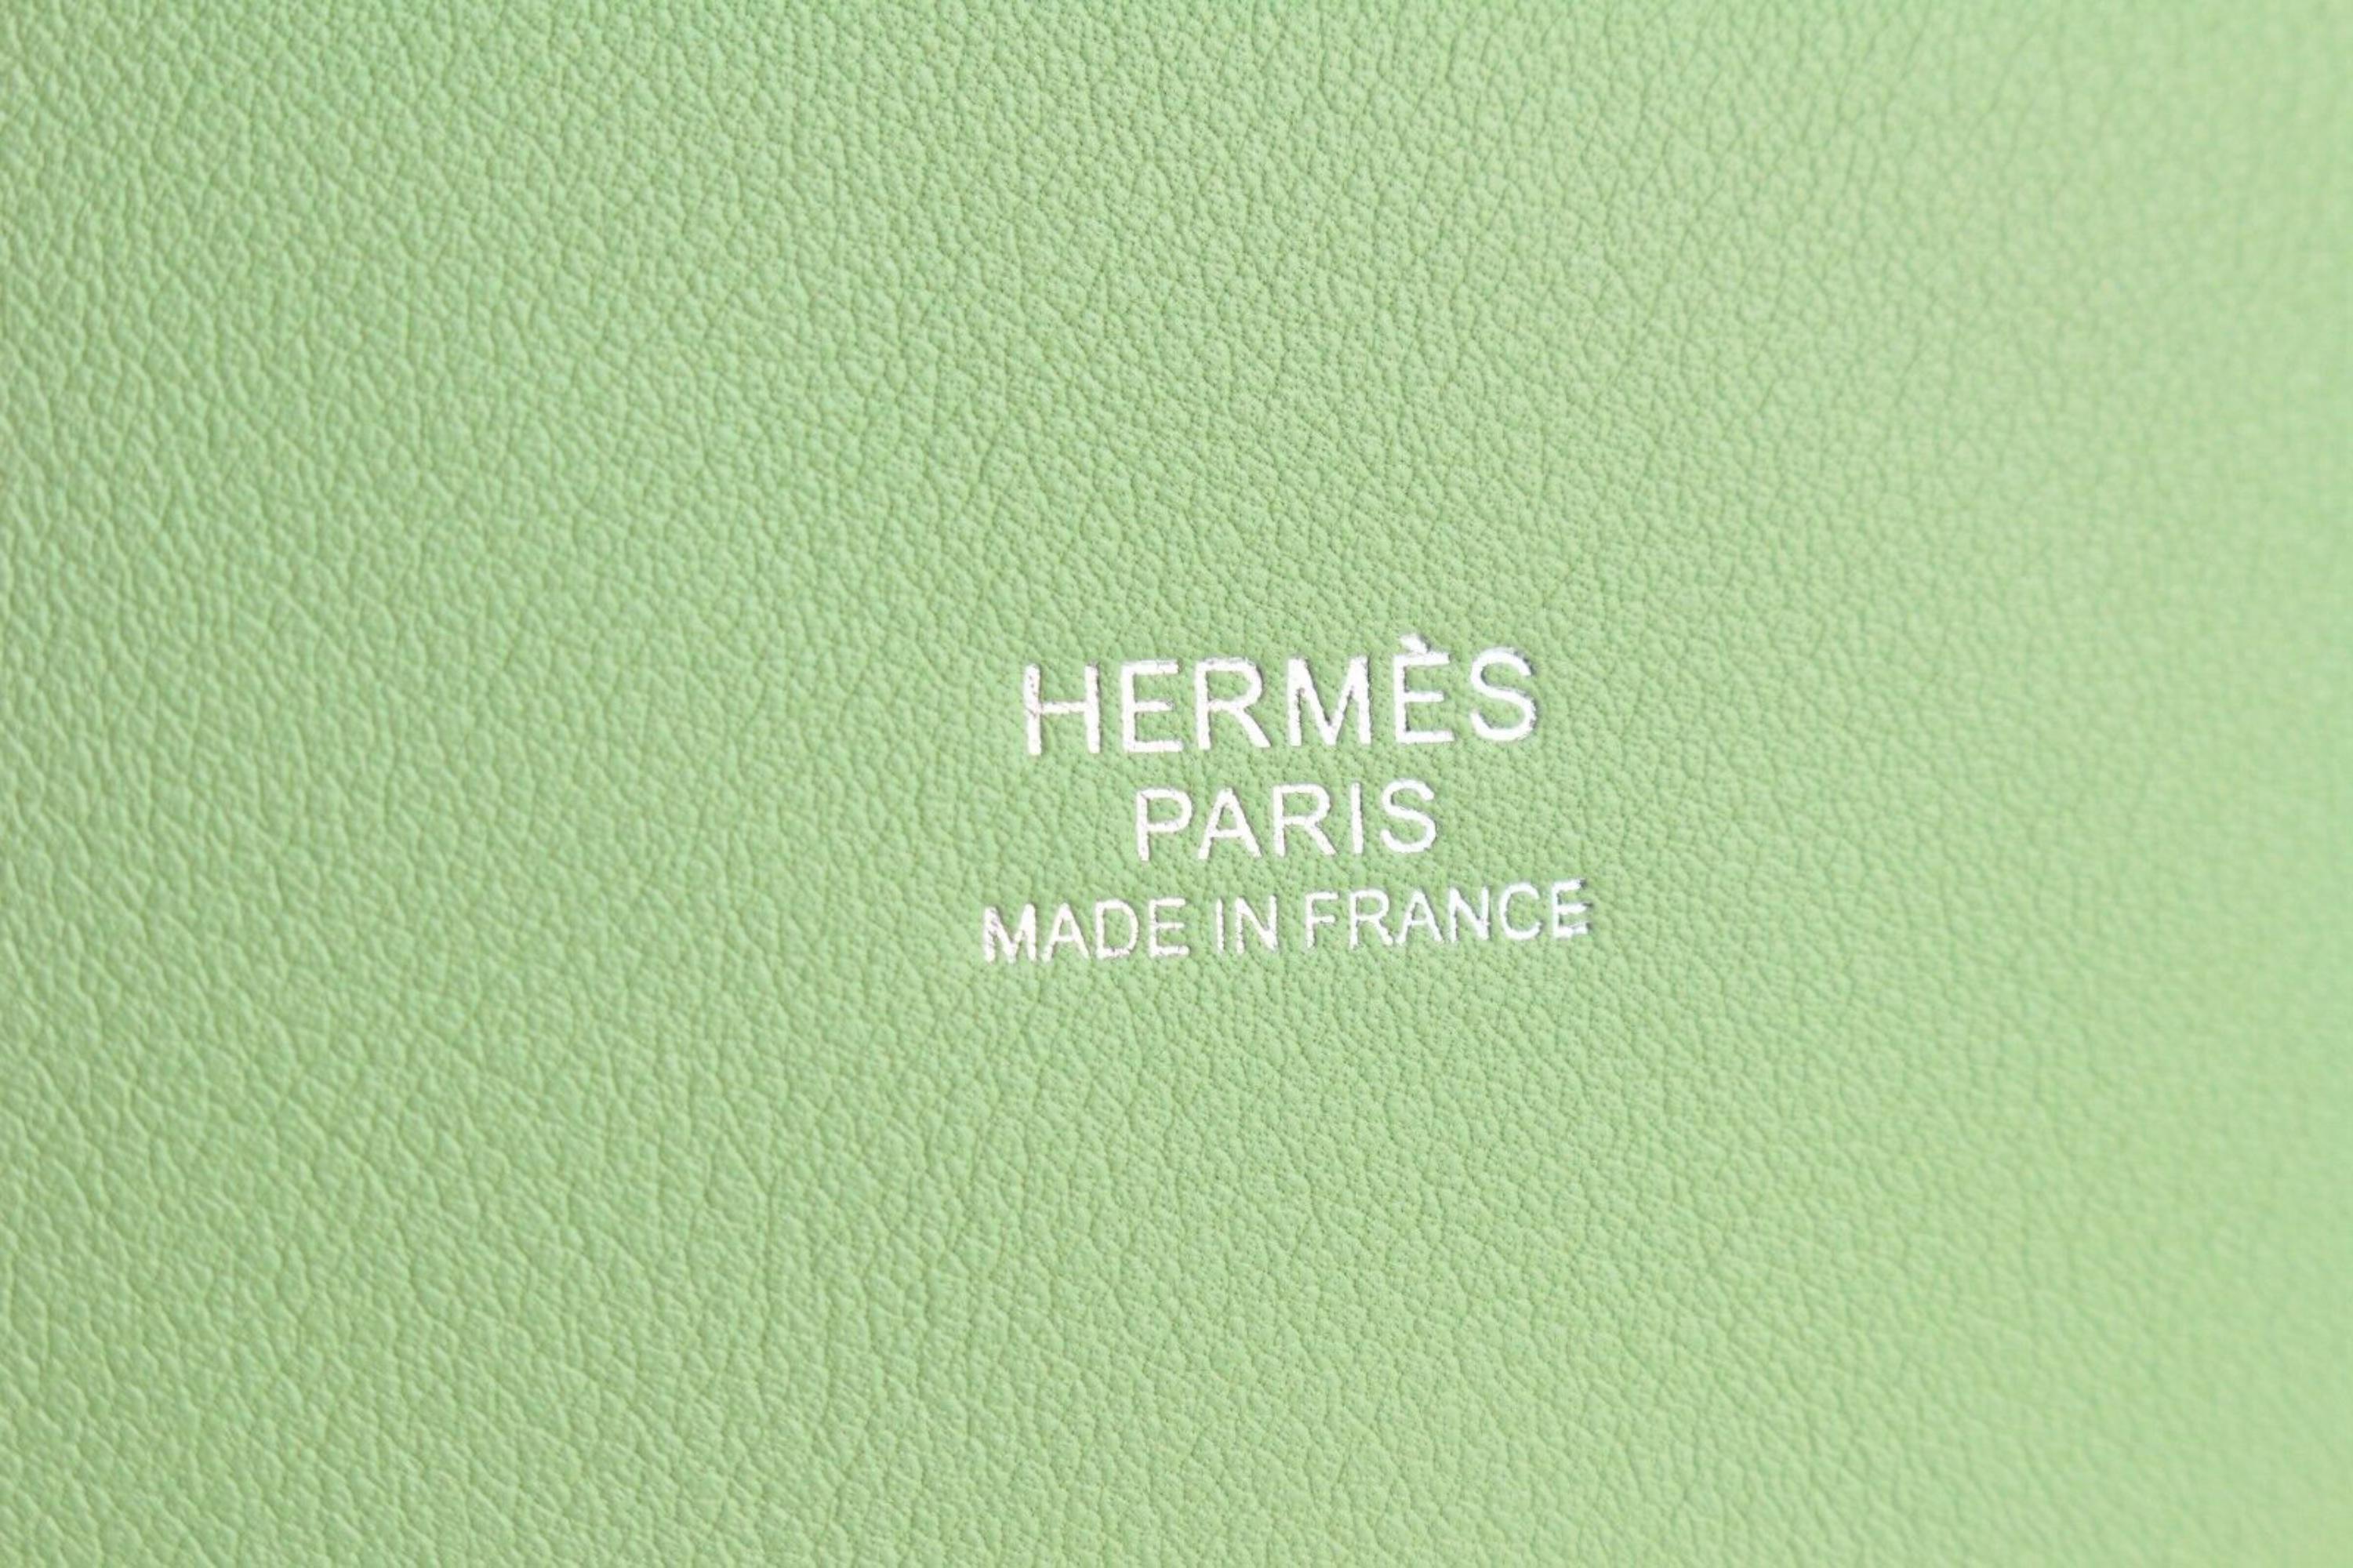 Hermes Swift Wicker Sac Farming Picnic Bag Naturel Vert Criquet 1H1118 6